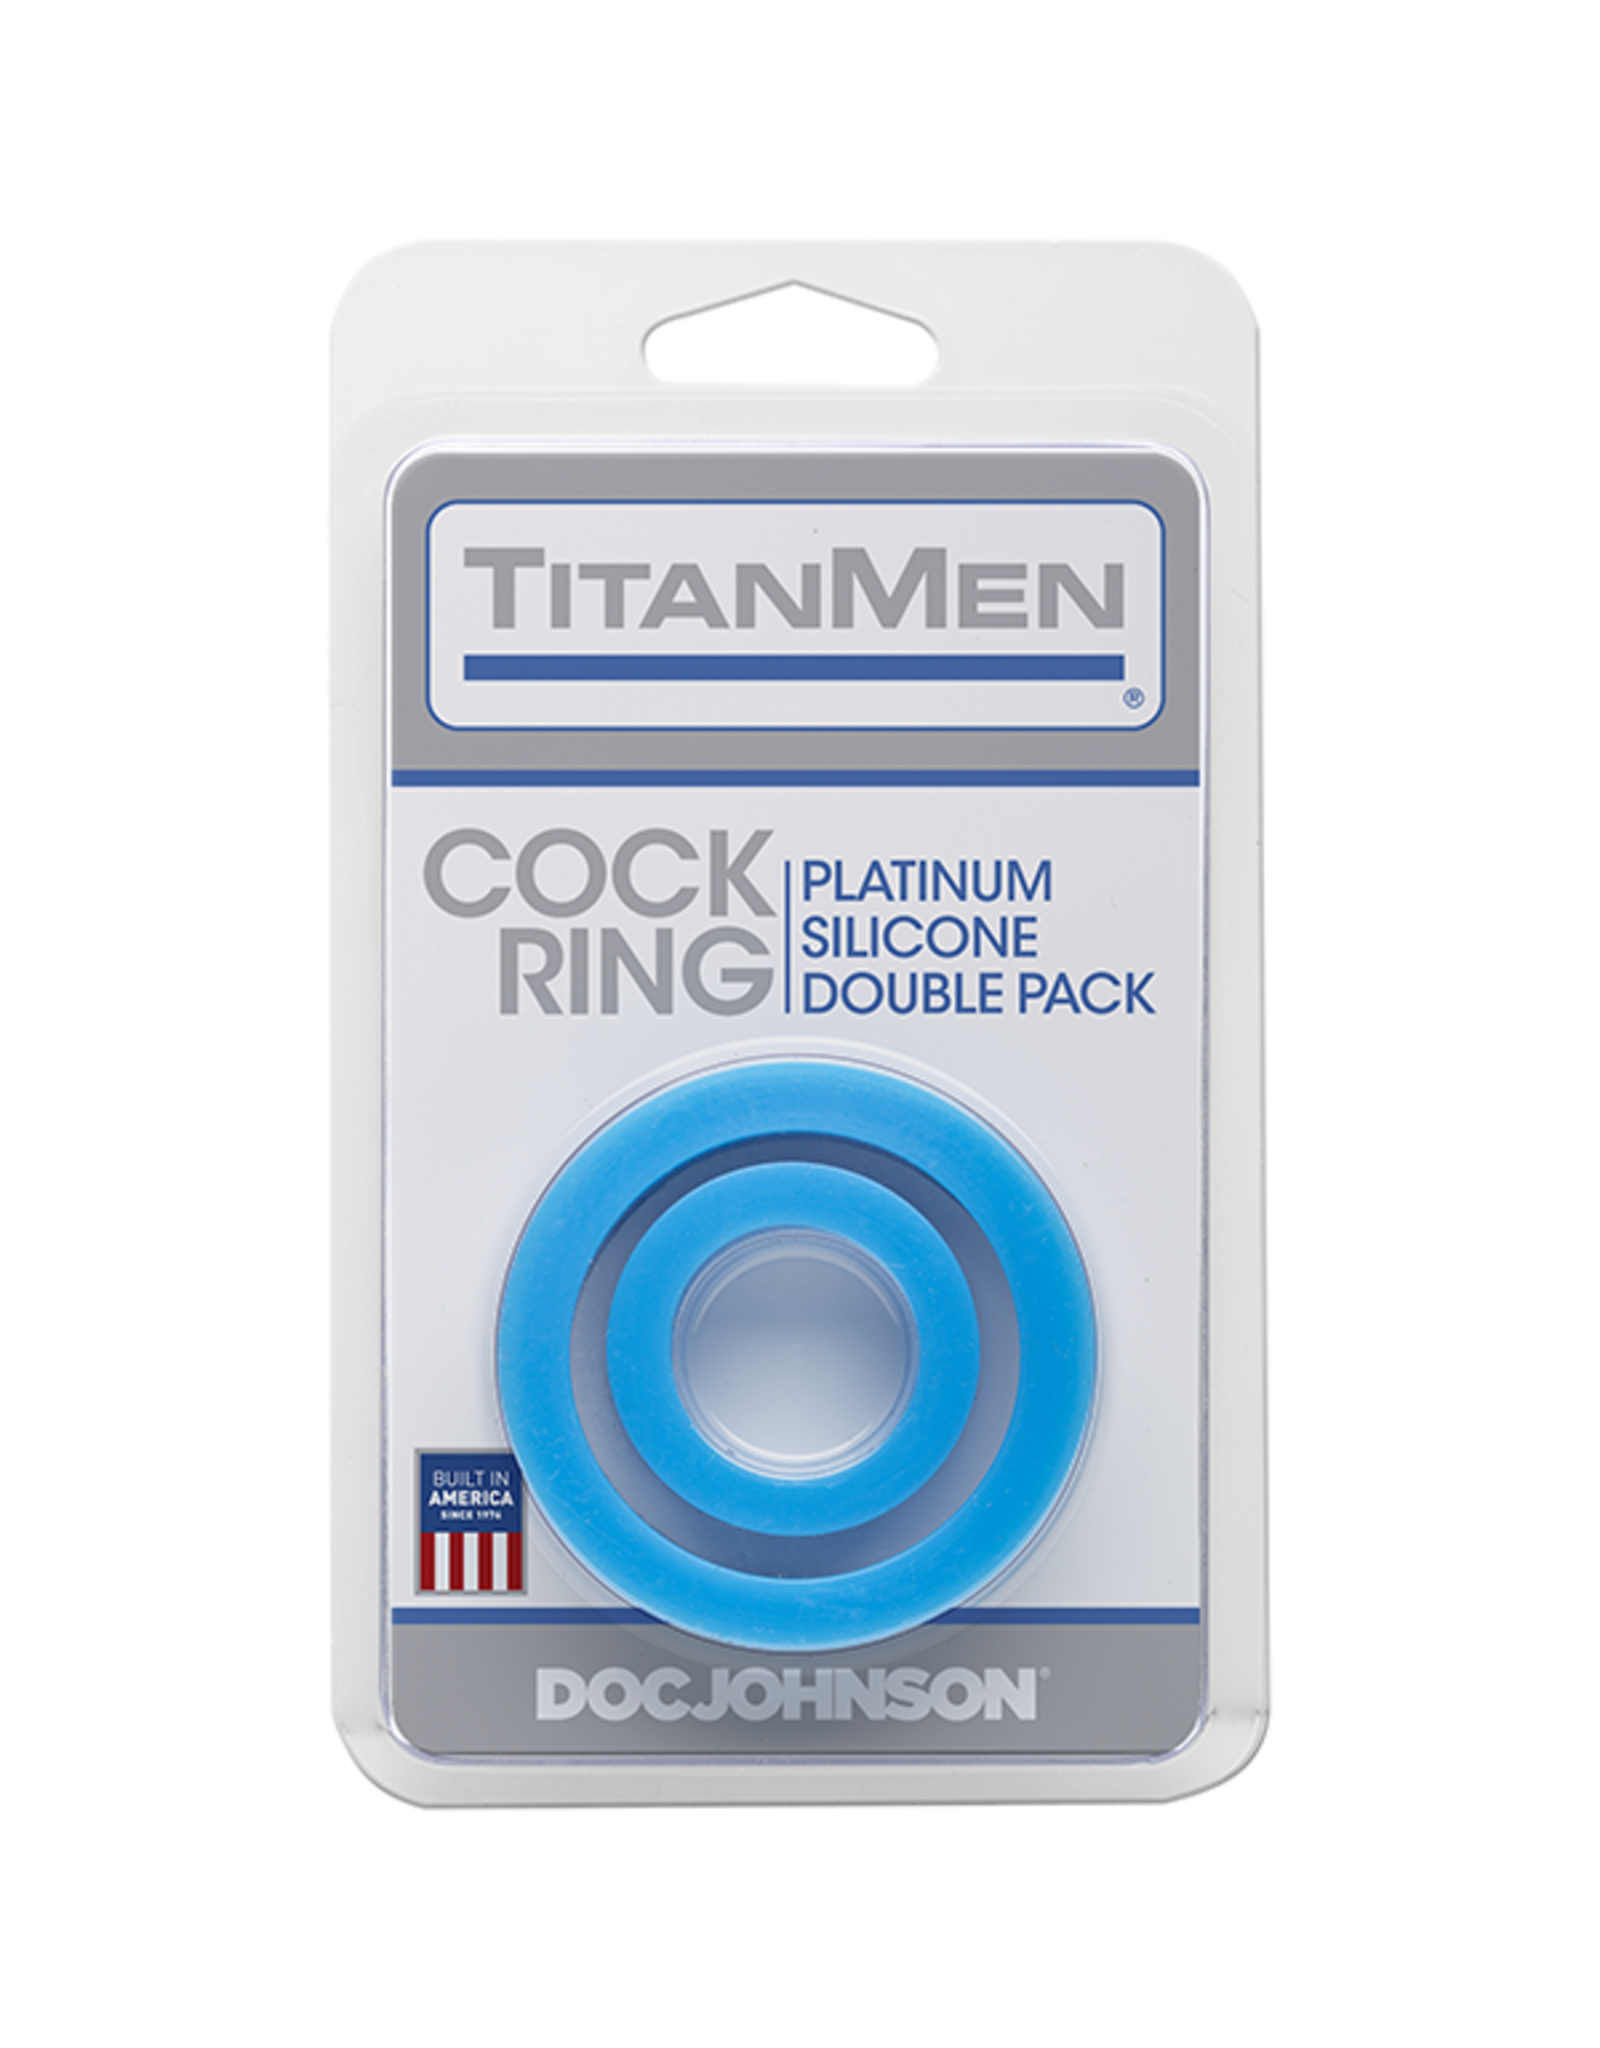 TitanMen TitanMen Cock Ring Double Pack